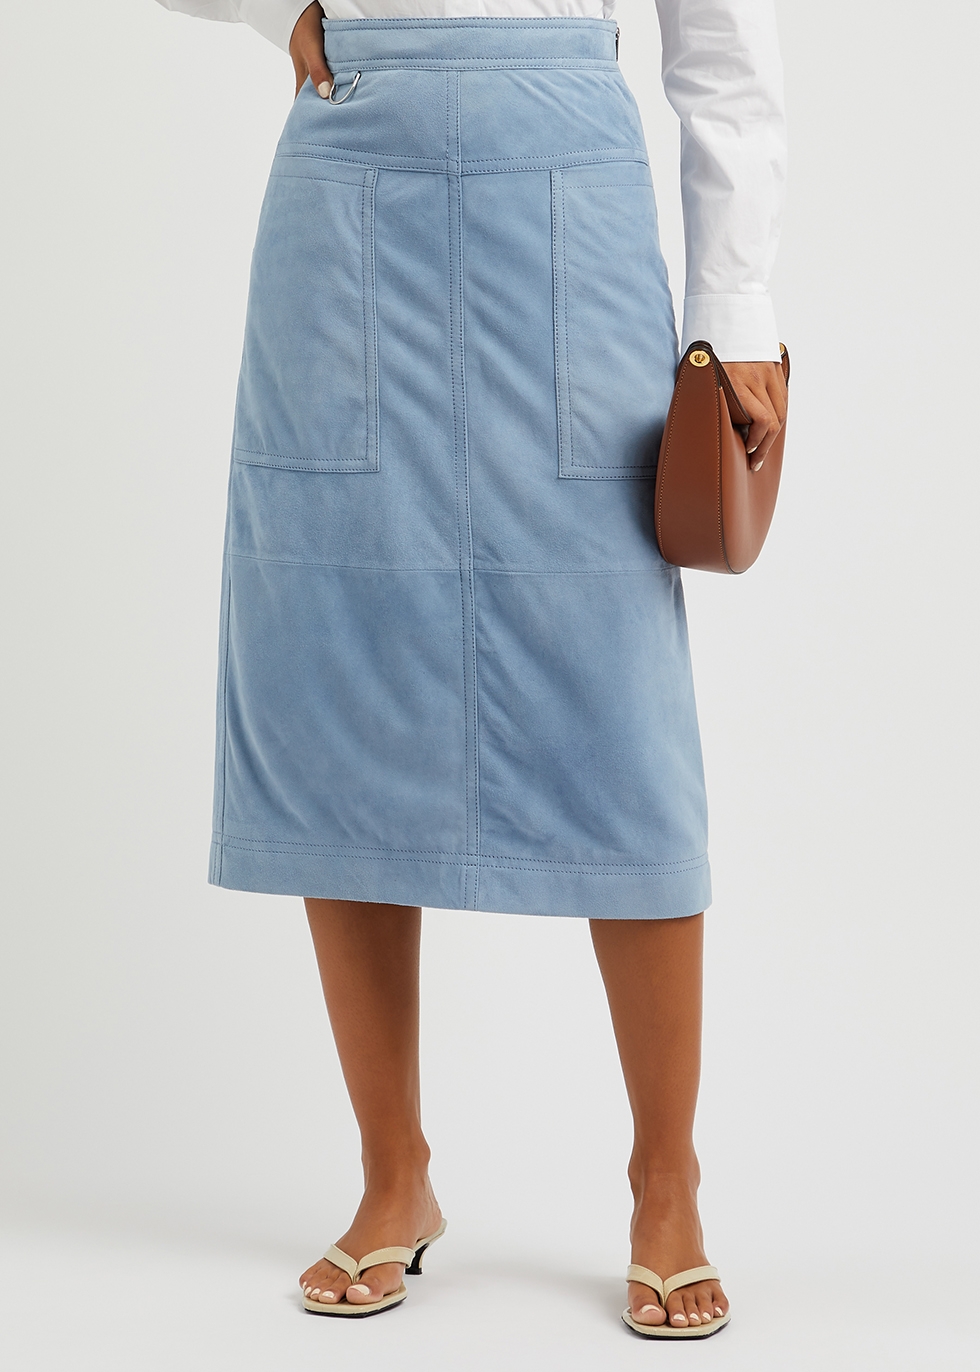 Harvey Nichols Women Clothing Skirts Leather Skirts Daisy blue suede midi skirt 